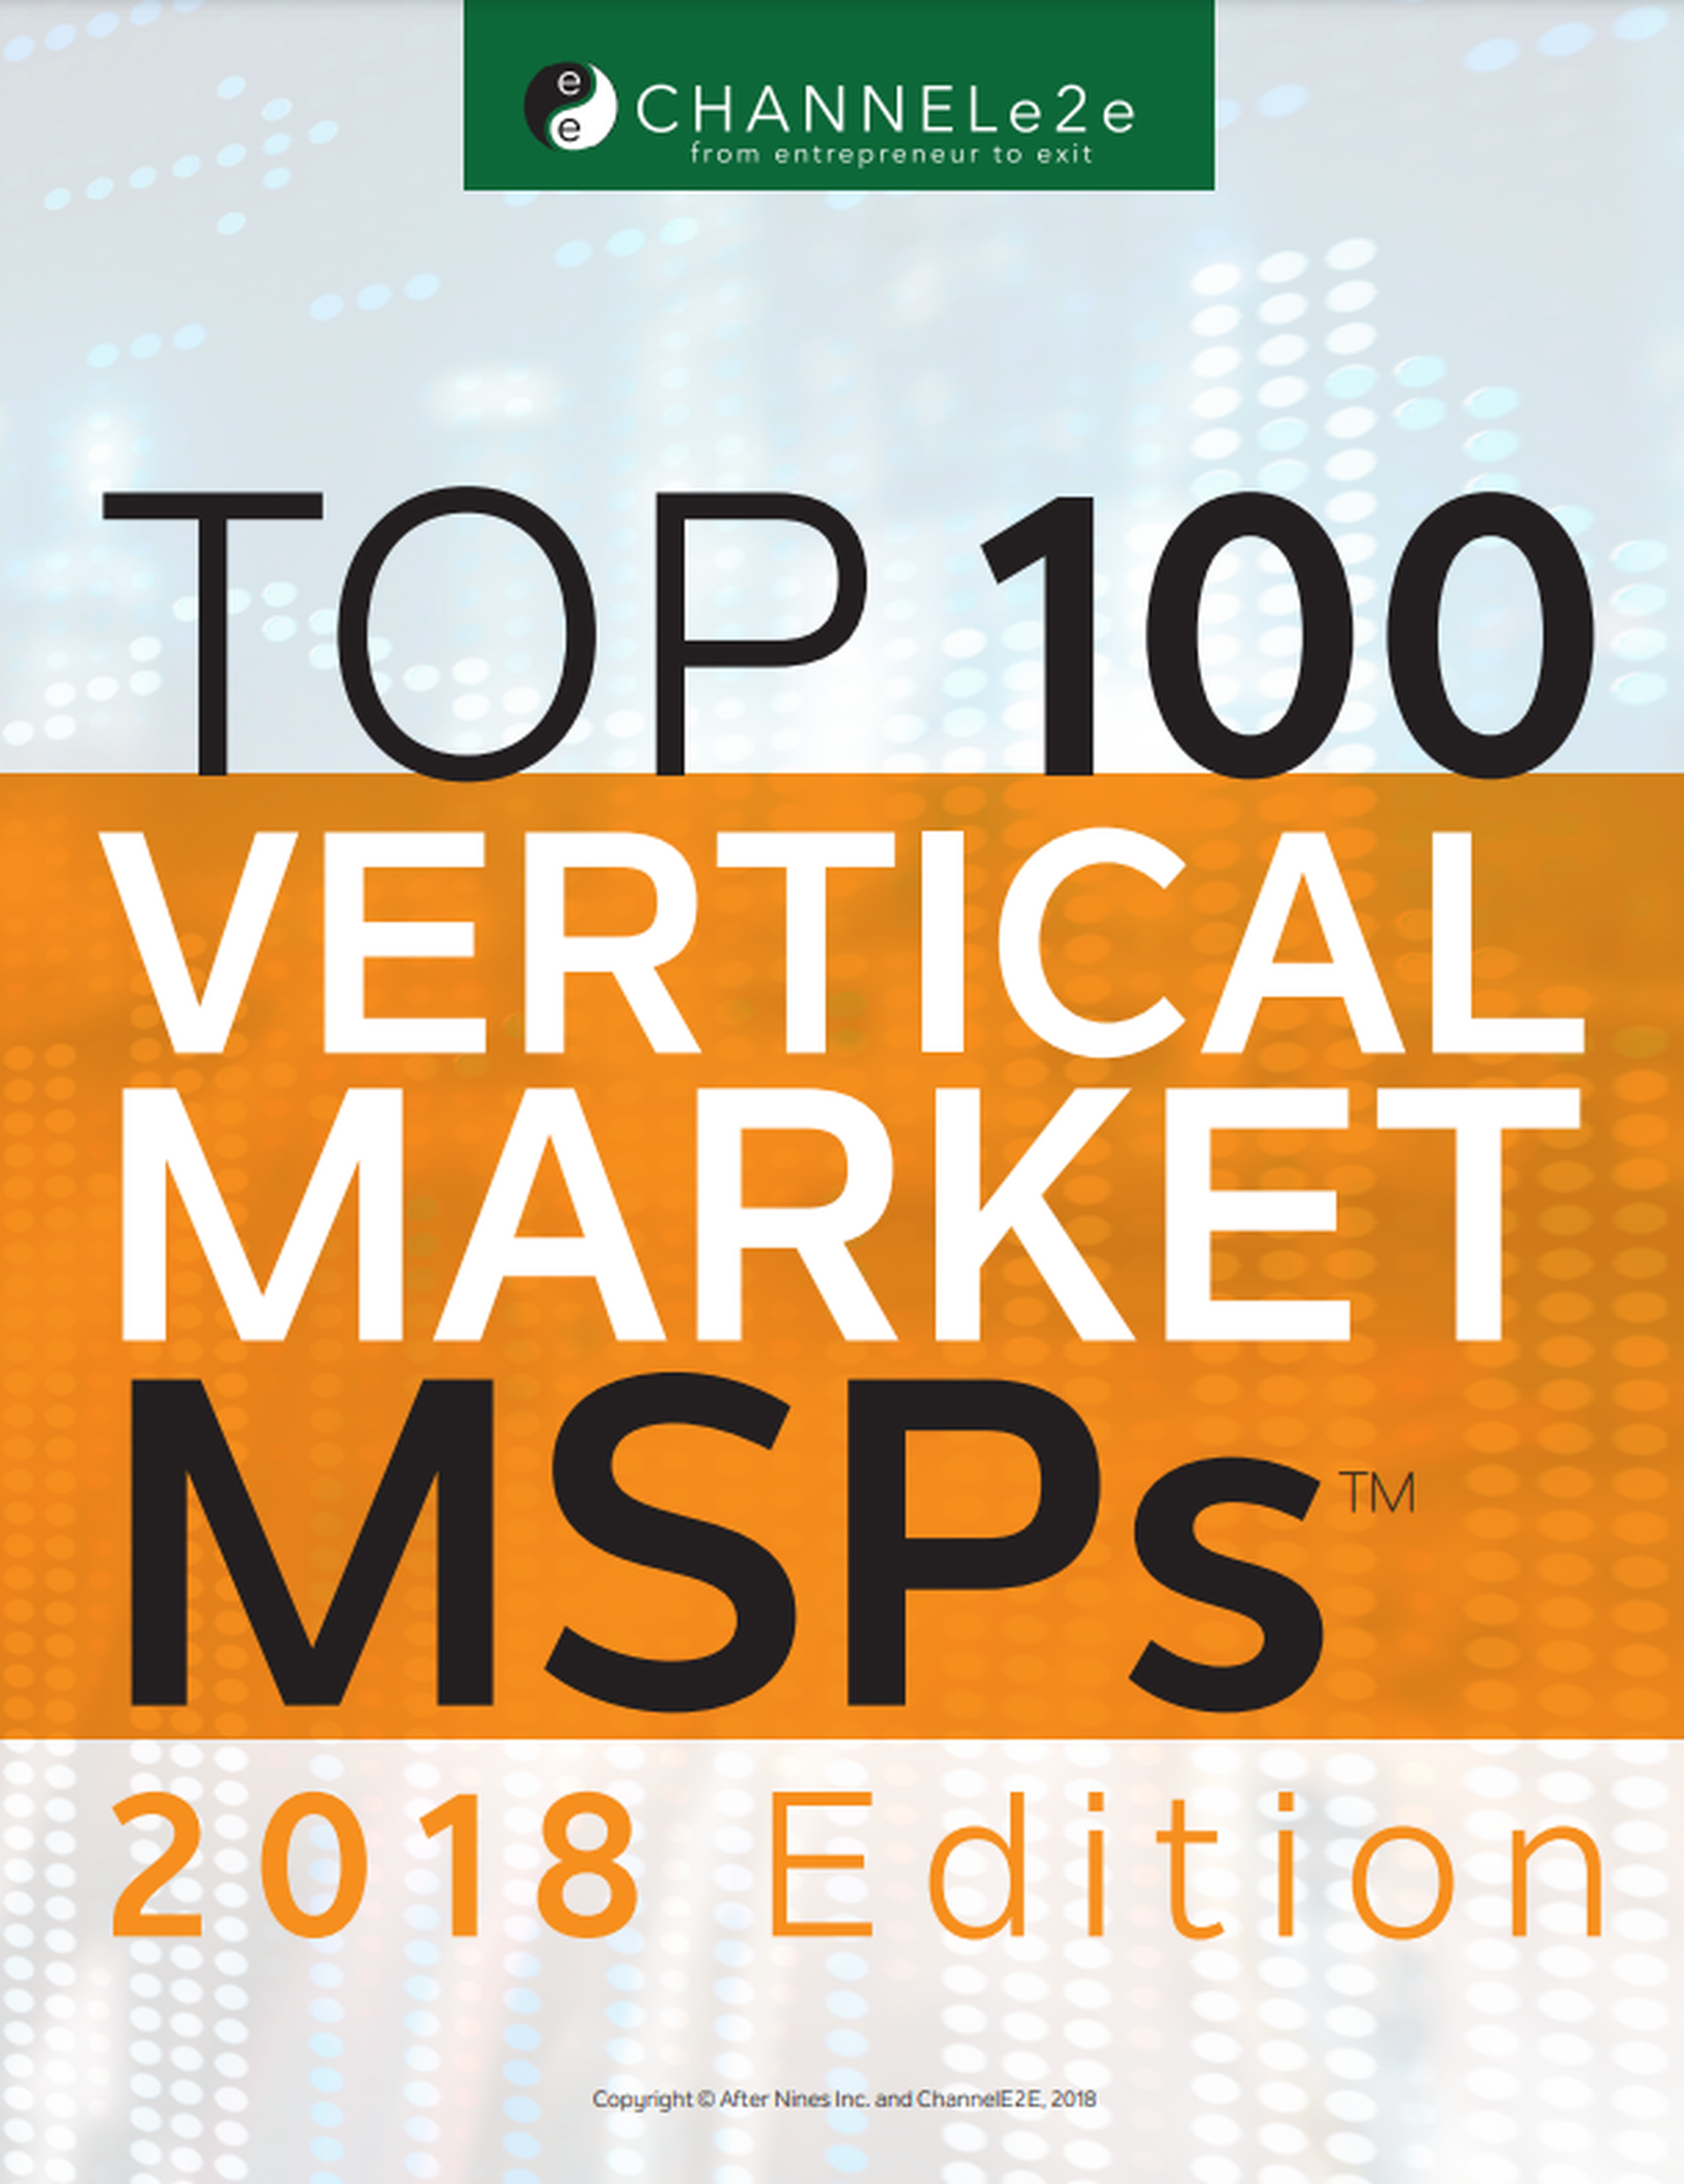 Top 100 Vertical Market MSPs 2018 Edition